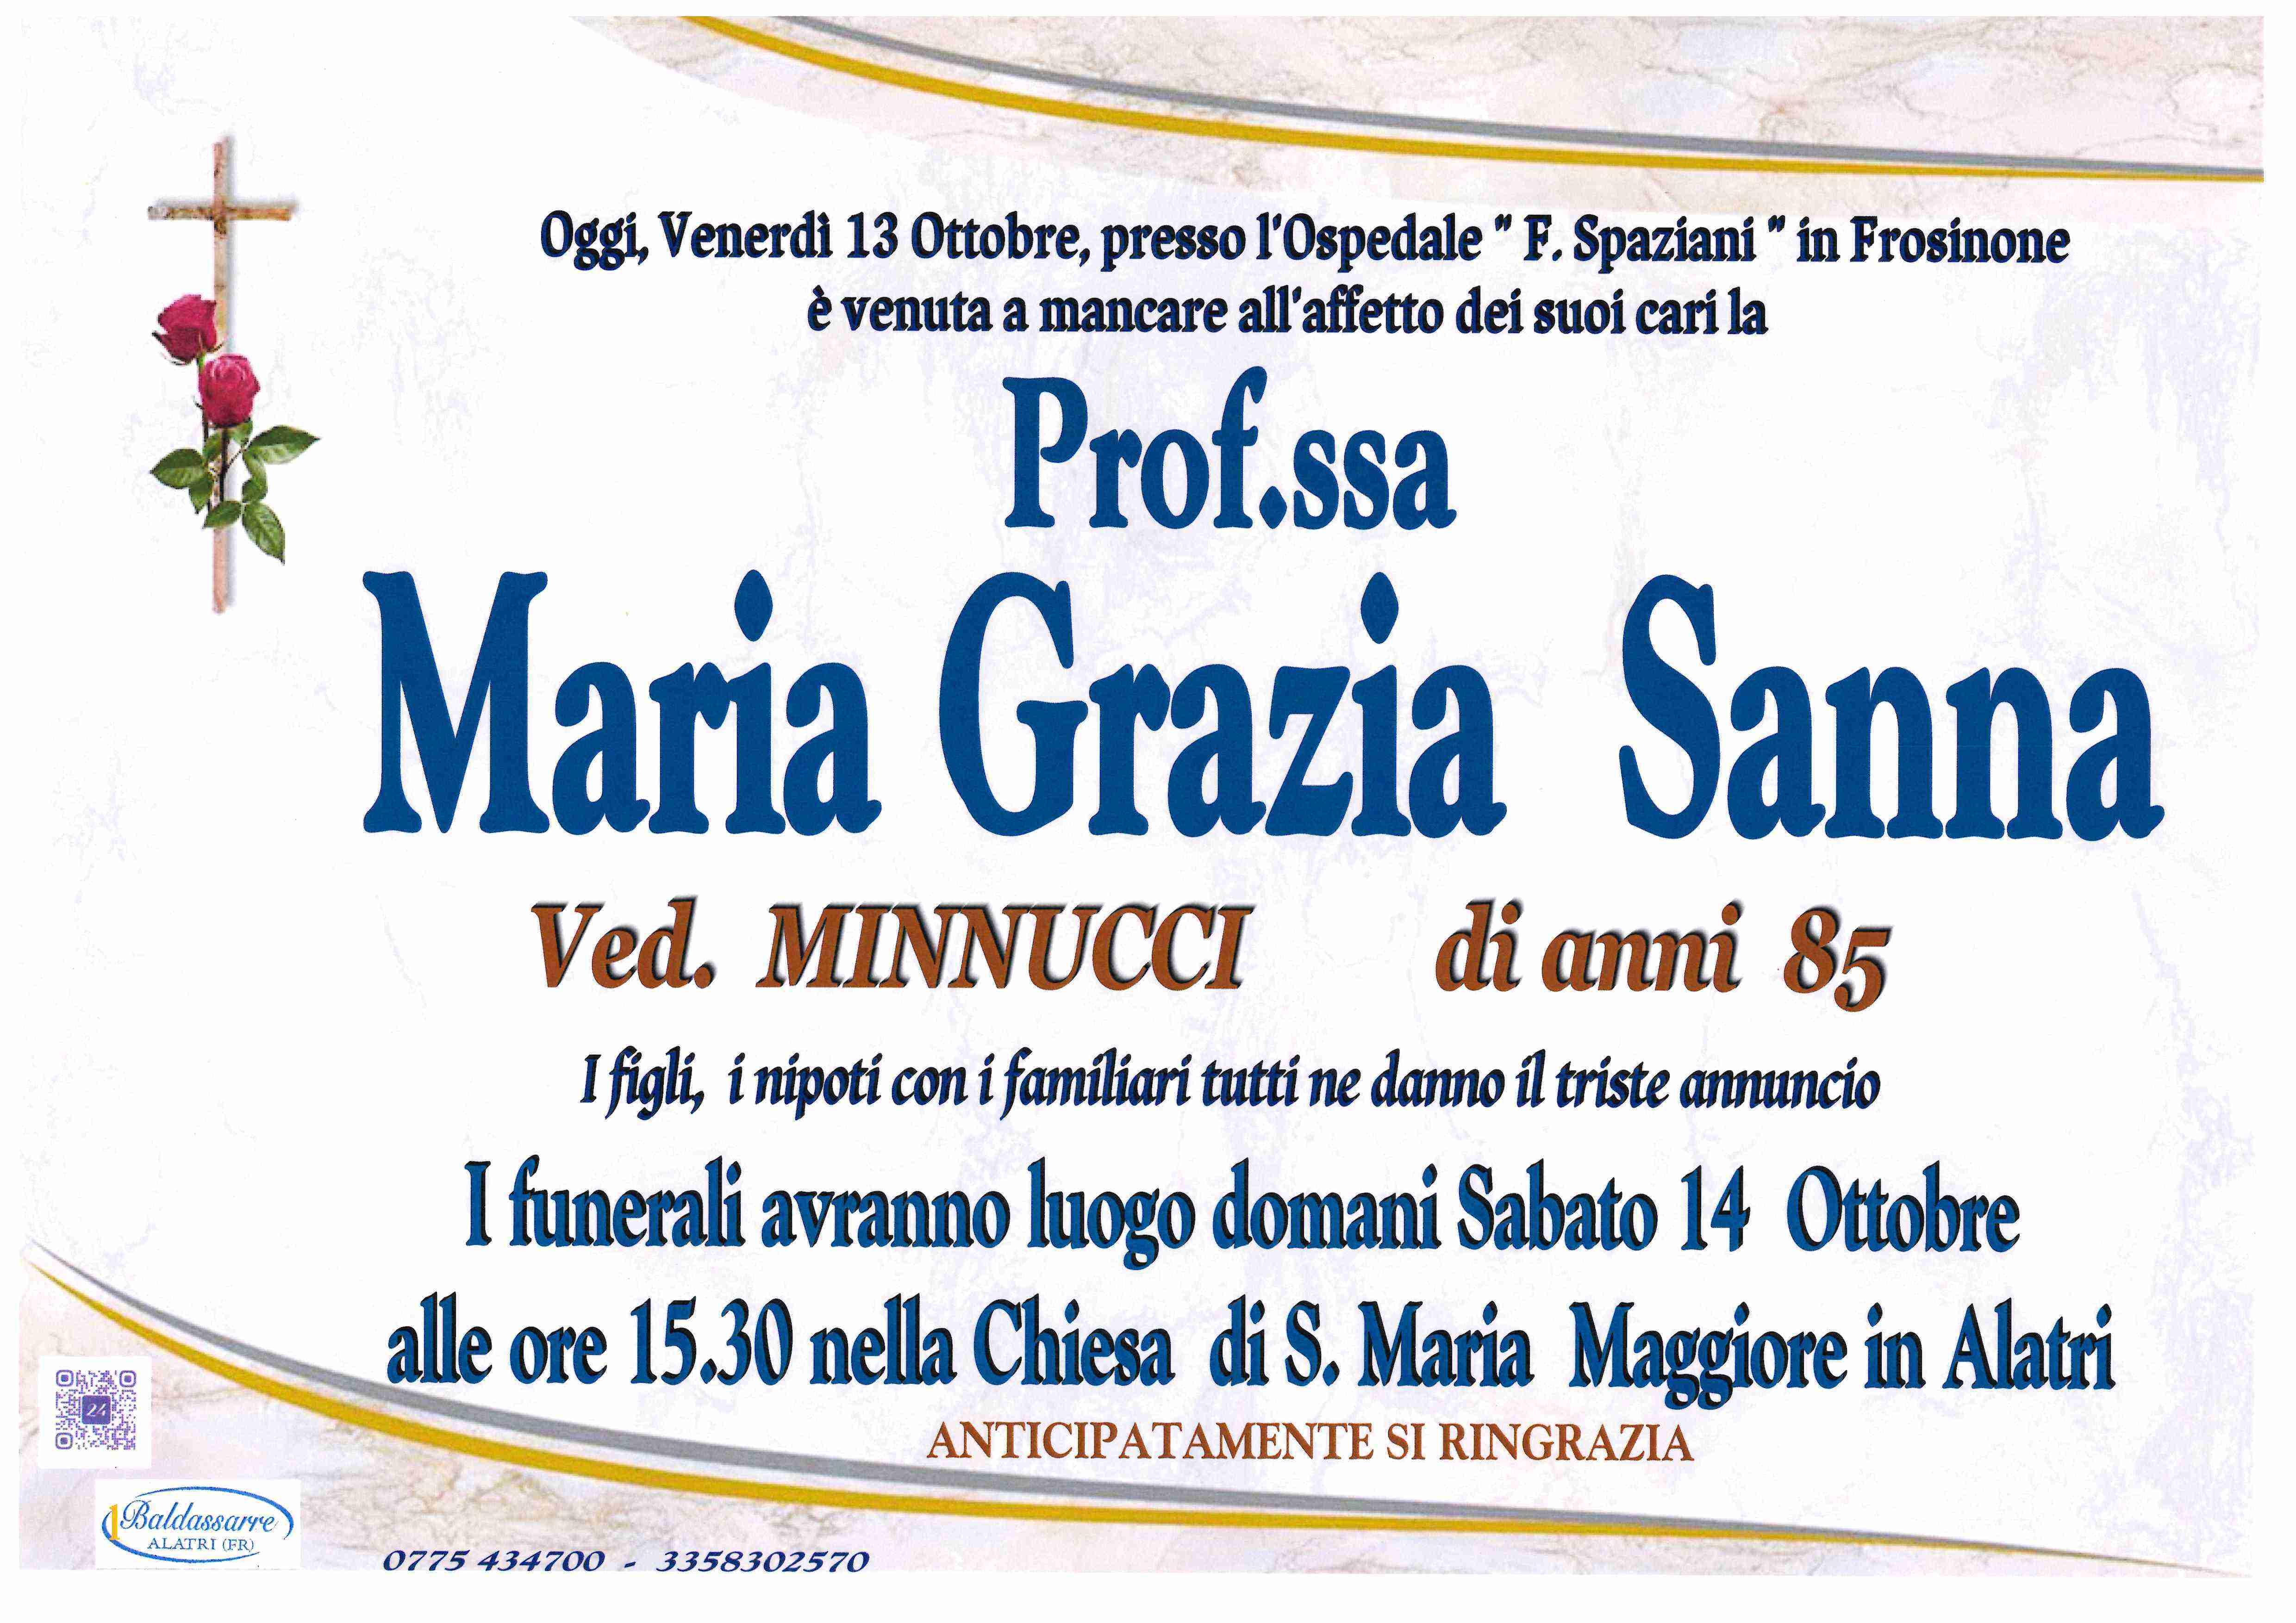 Maria Grazia Sanna